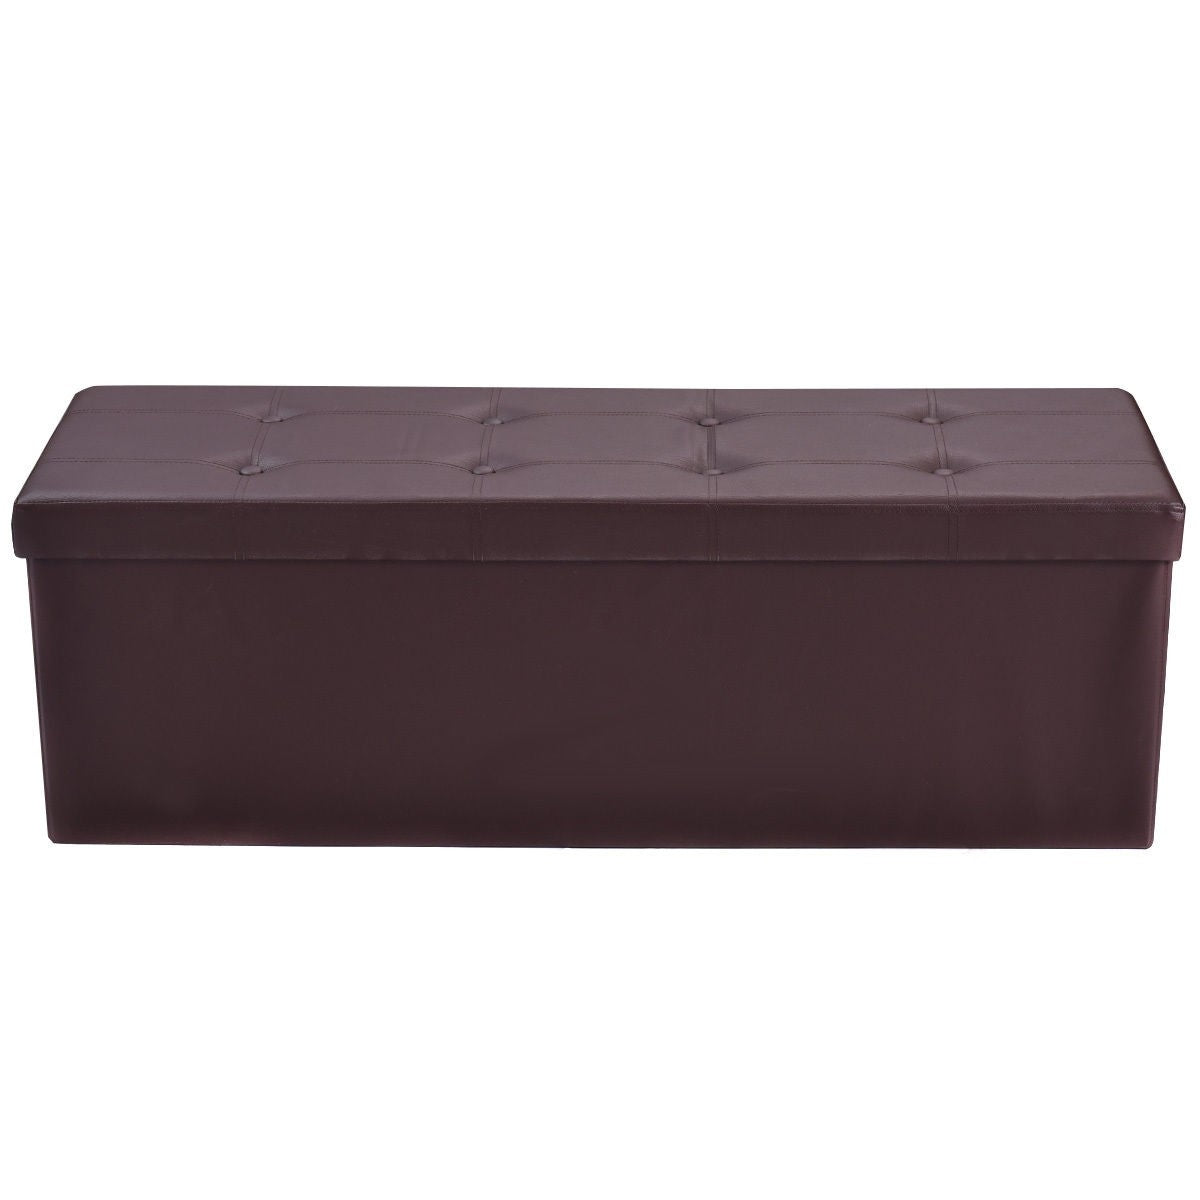 Giantex 45" Folding Storage Ottoman Bench, Faux Leather